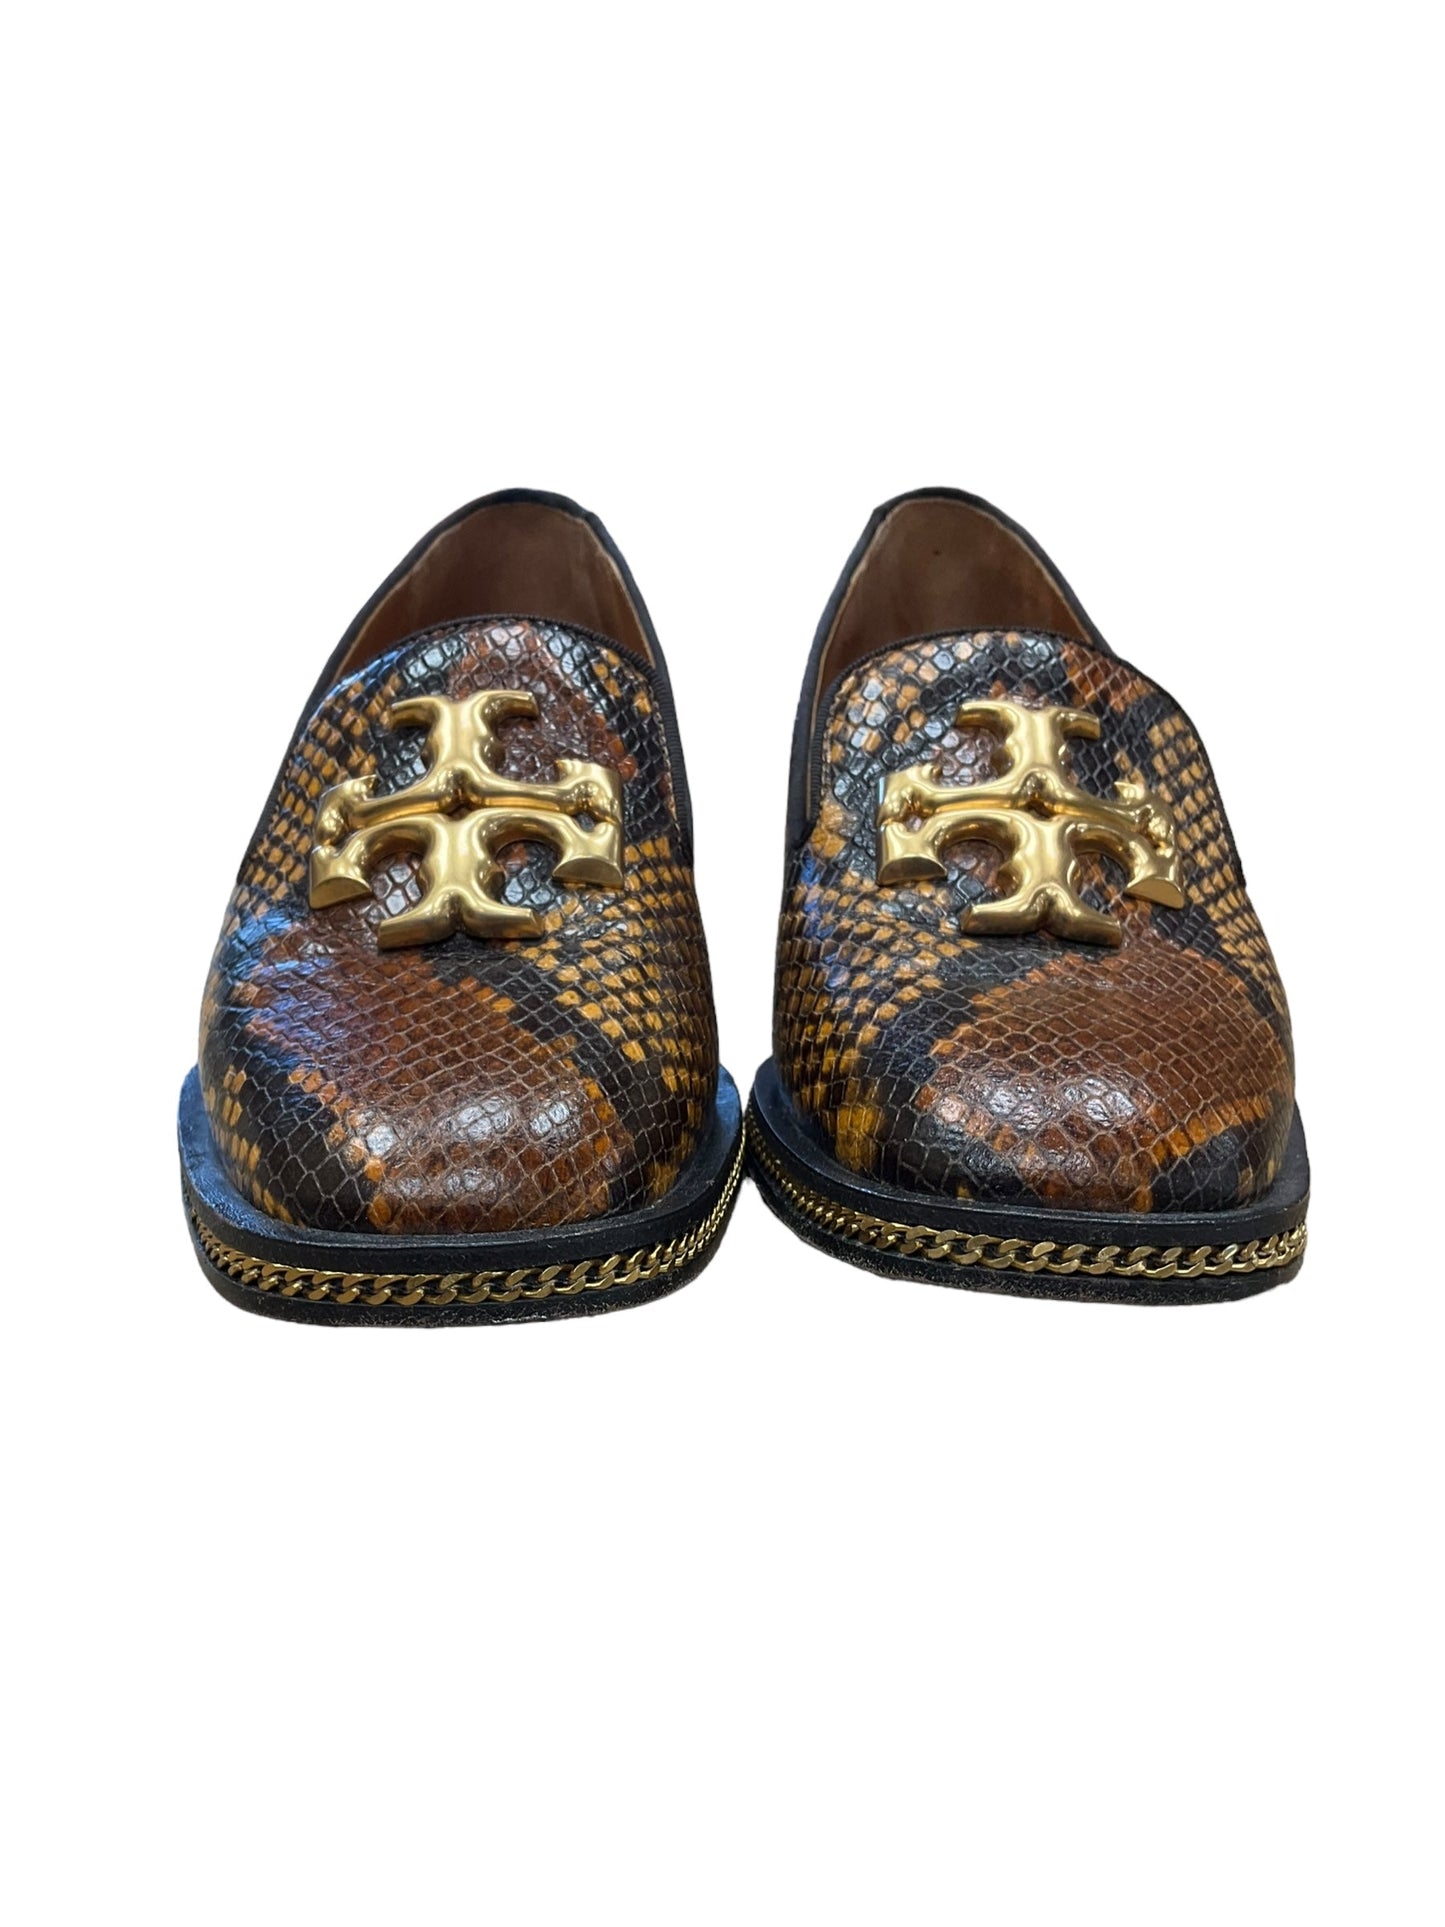 Snakeskin Print Shoes Designer Tory Burch, Size 7.5